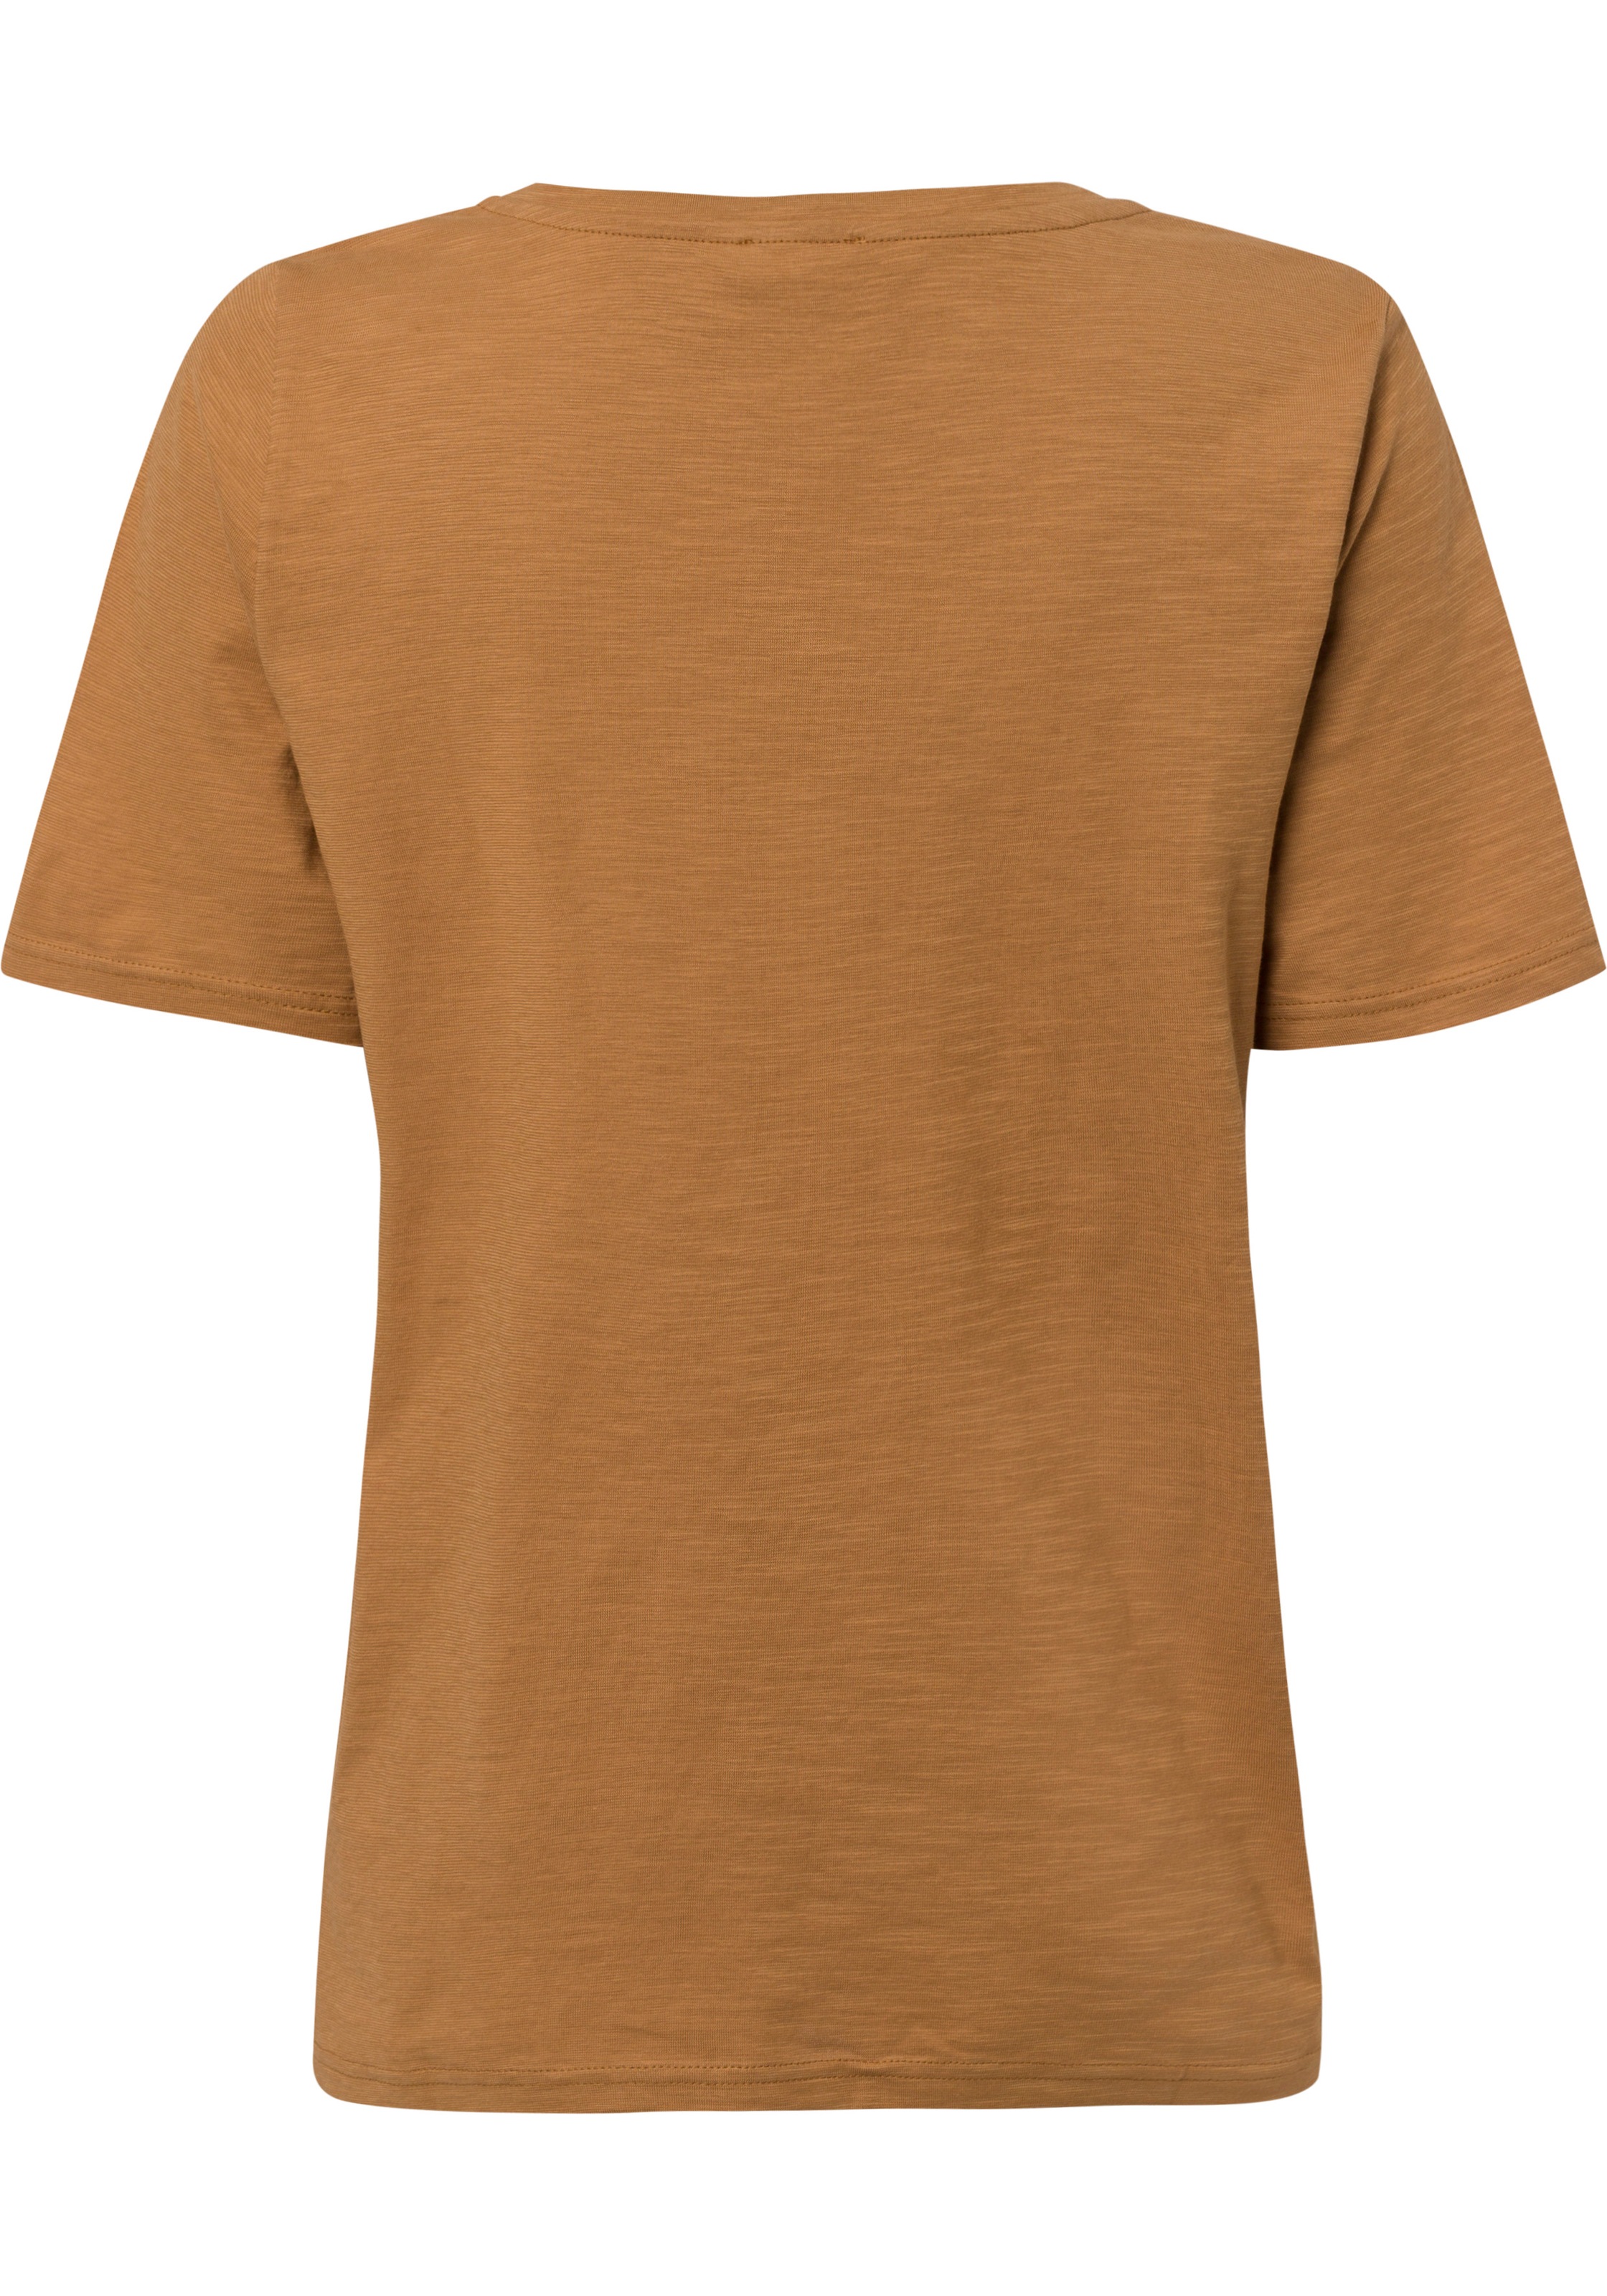 Flammgarnjersey of United OTTO T-Shirt, Colors bei kaufen Benetton aus